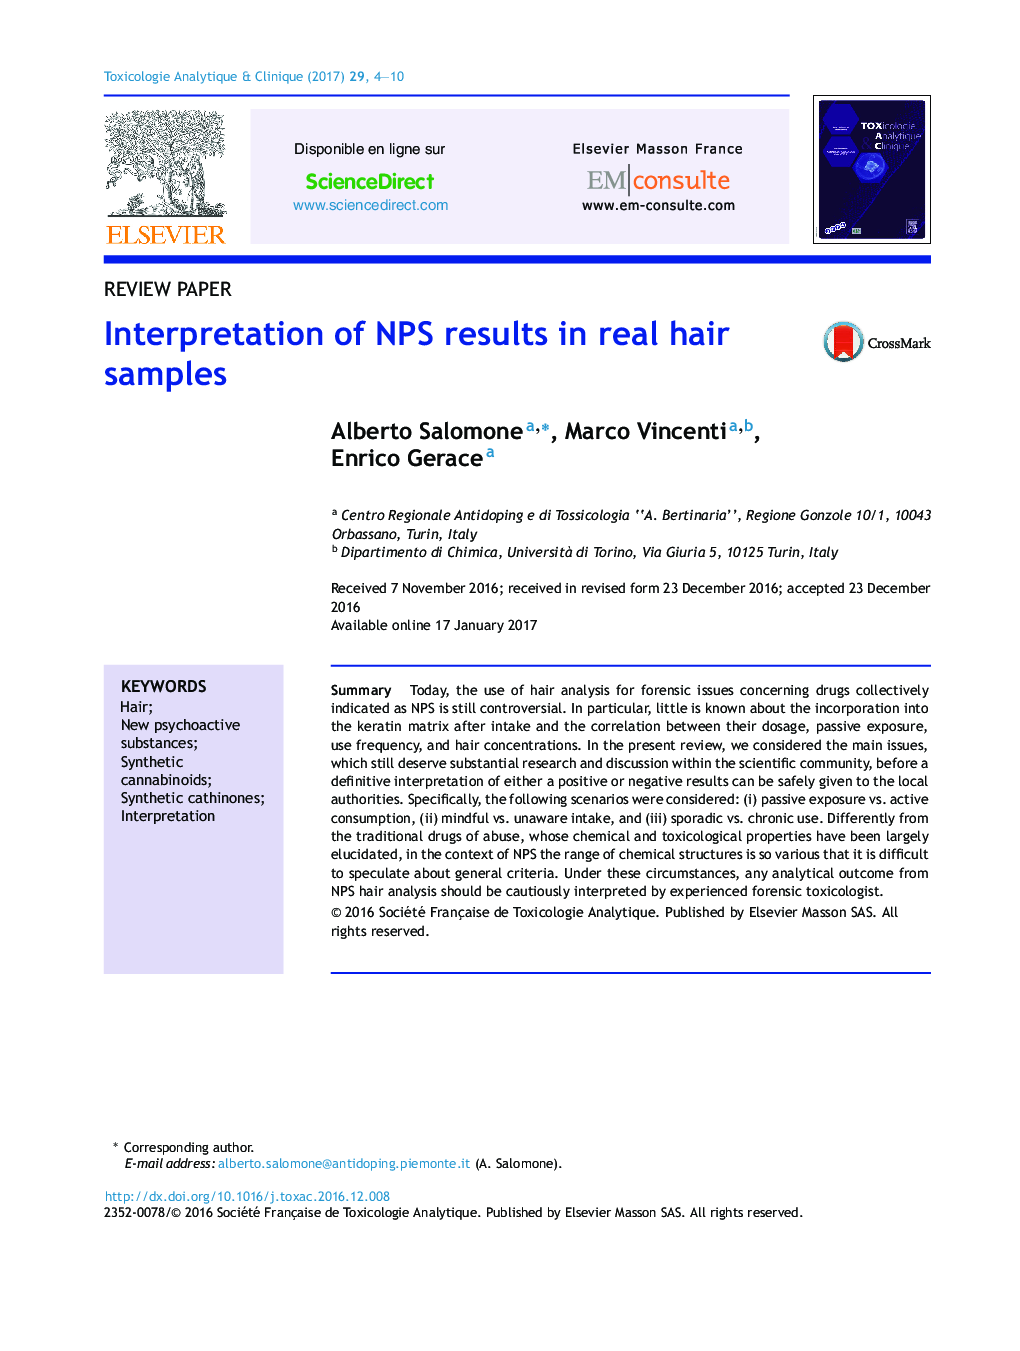 Interpretation of NPS results in real hair samples